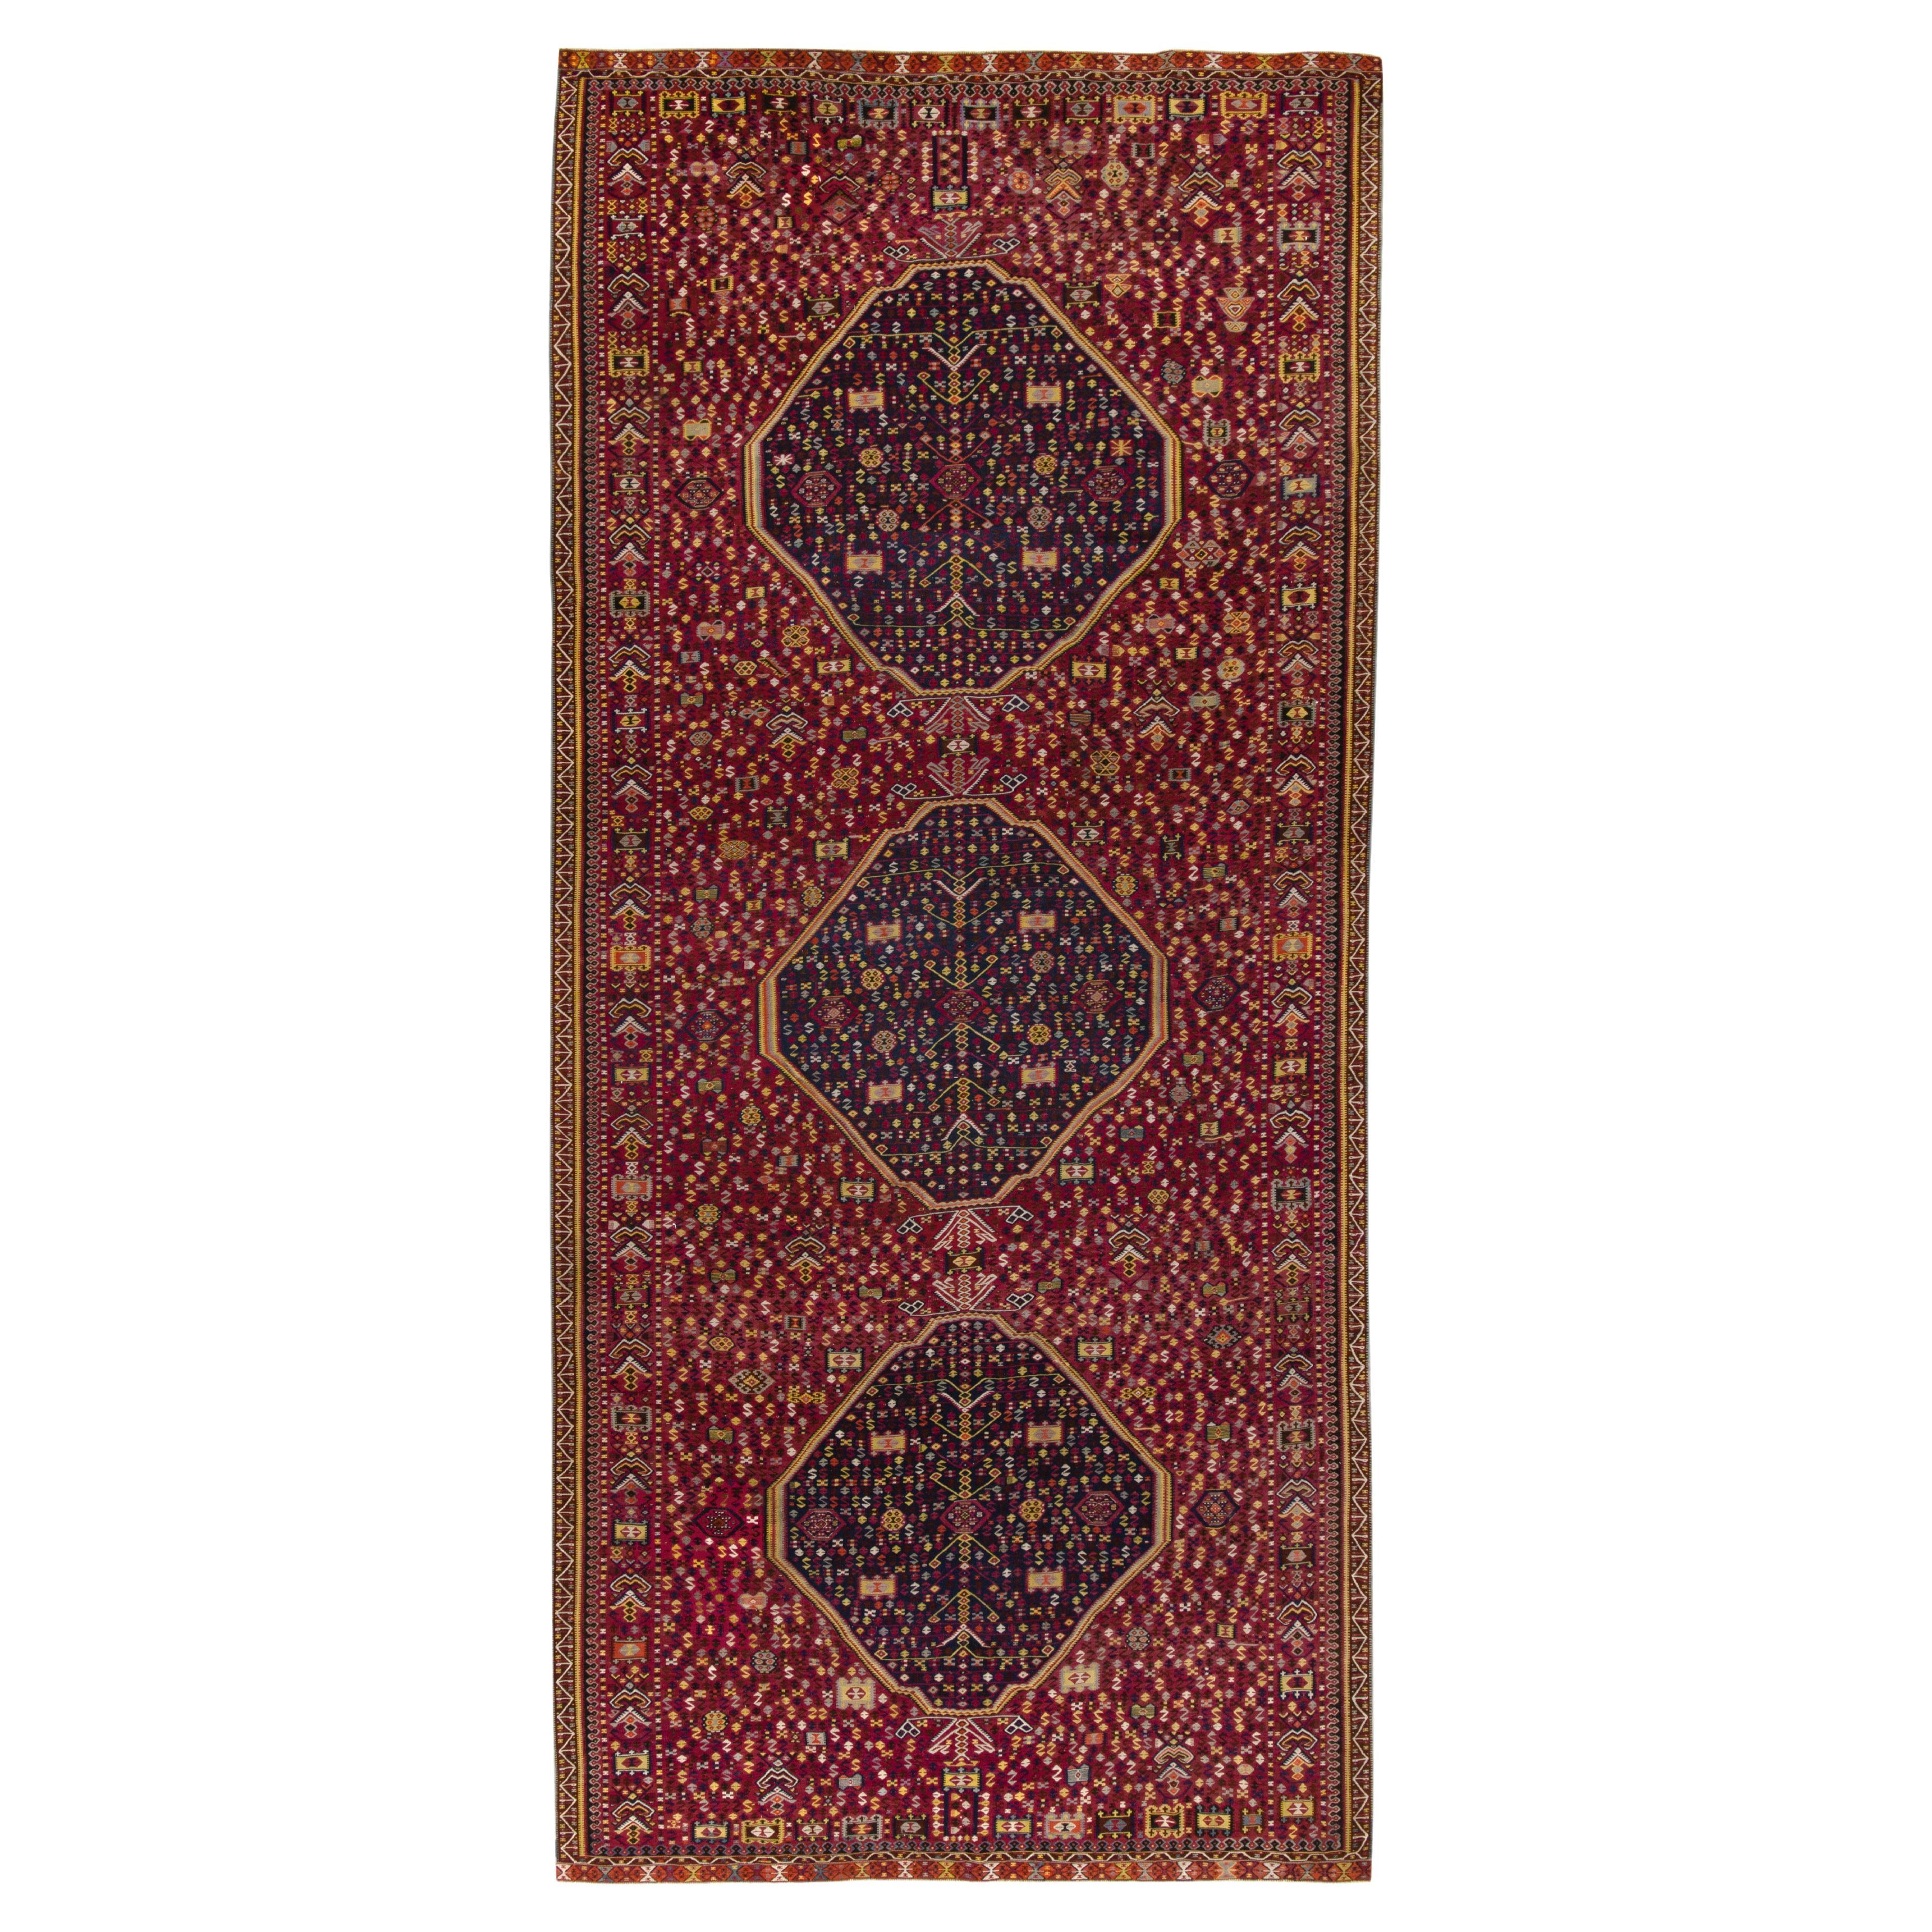 Handwoven Vintage Turkish Kilim Rug in Maroon Geometric Pattern by Rug & Kilim For Sale